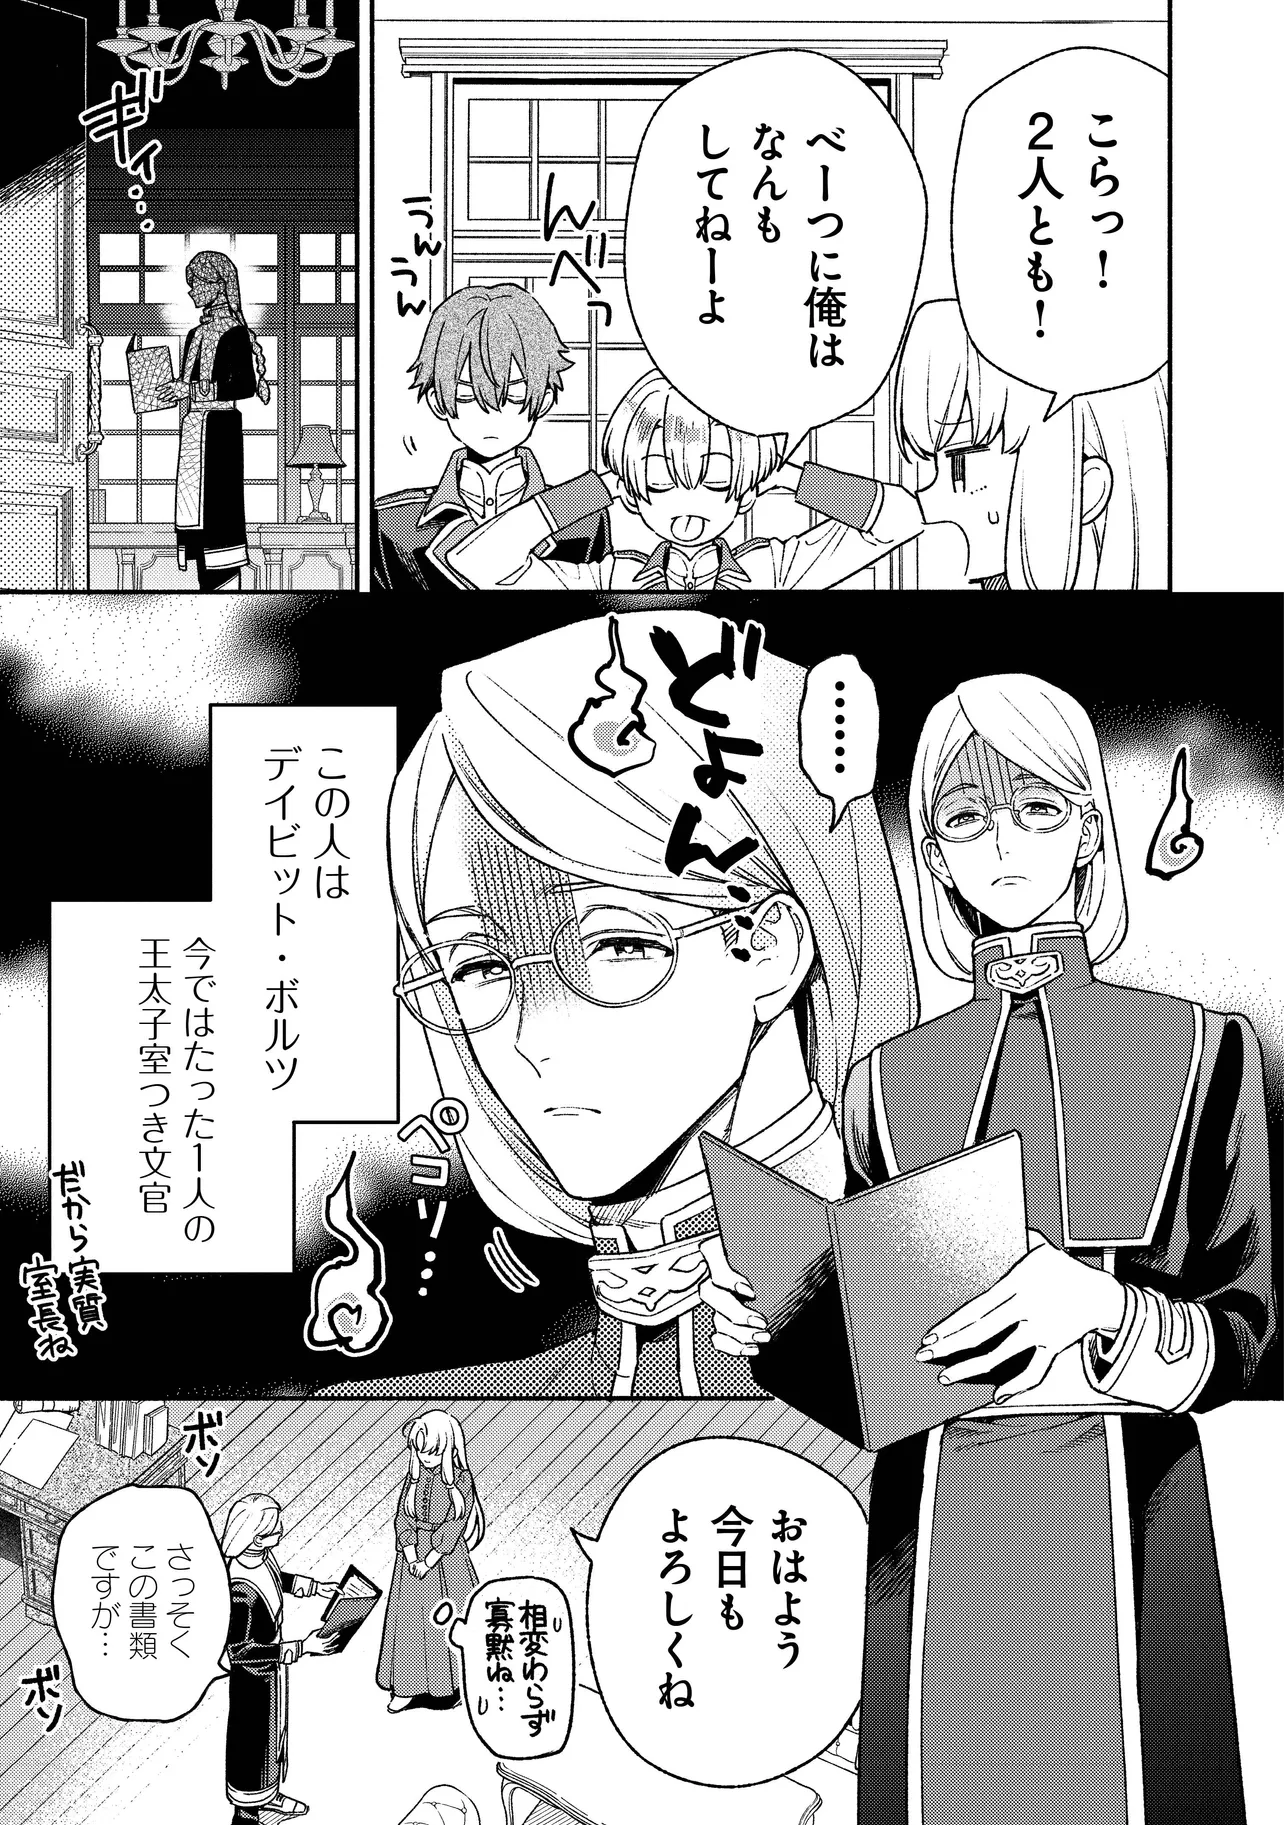 Hazure Hime wa Igaito Aisareteiru? - Chapter 4.2 - Page 2